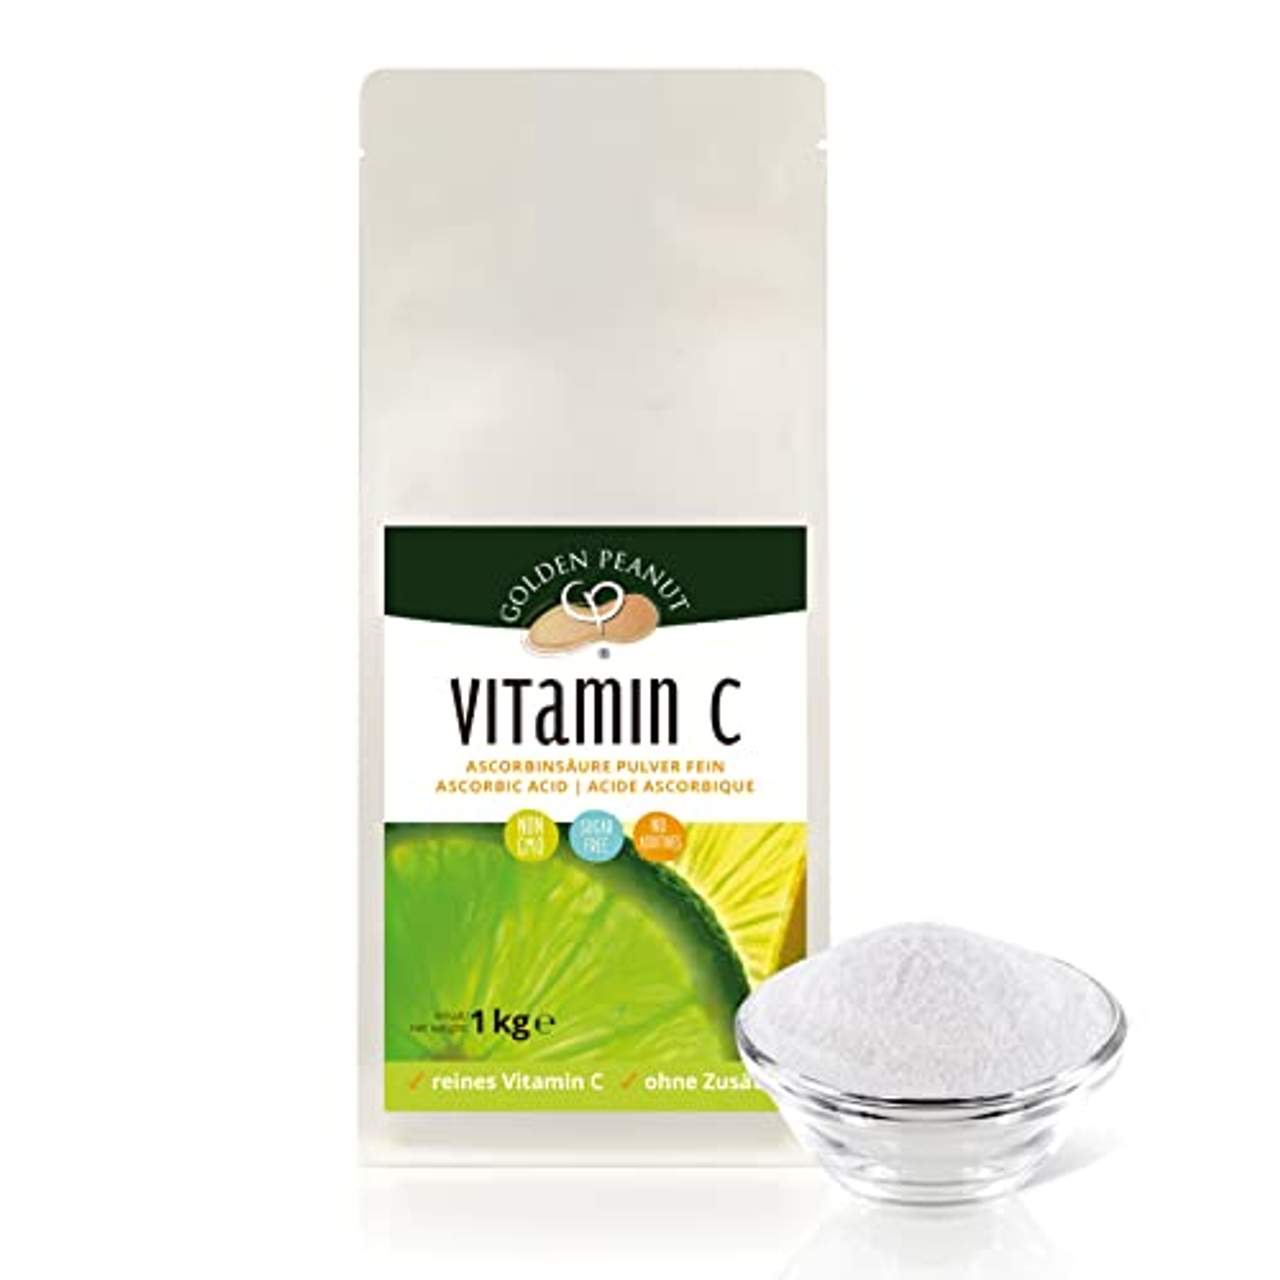 Vitamin C 1 kg Ascorbinsäure Pulver